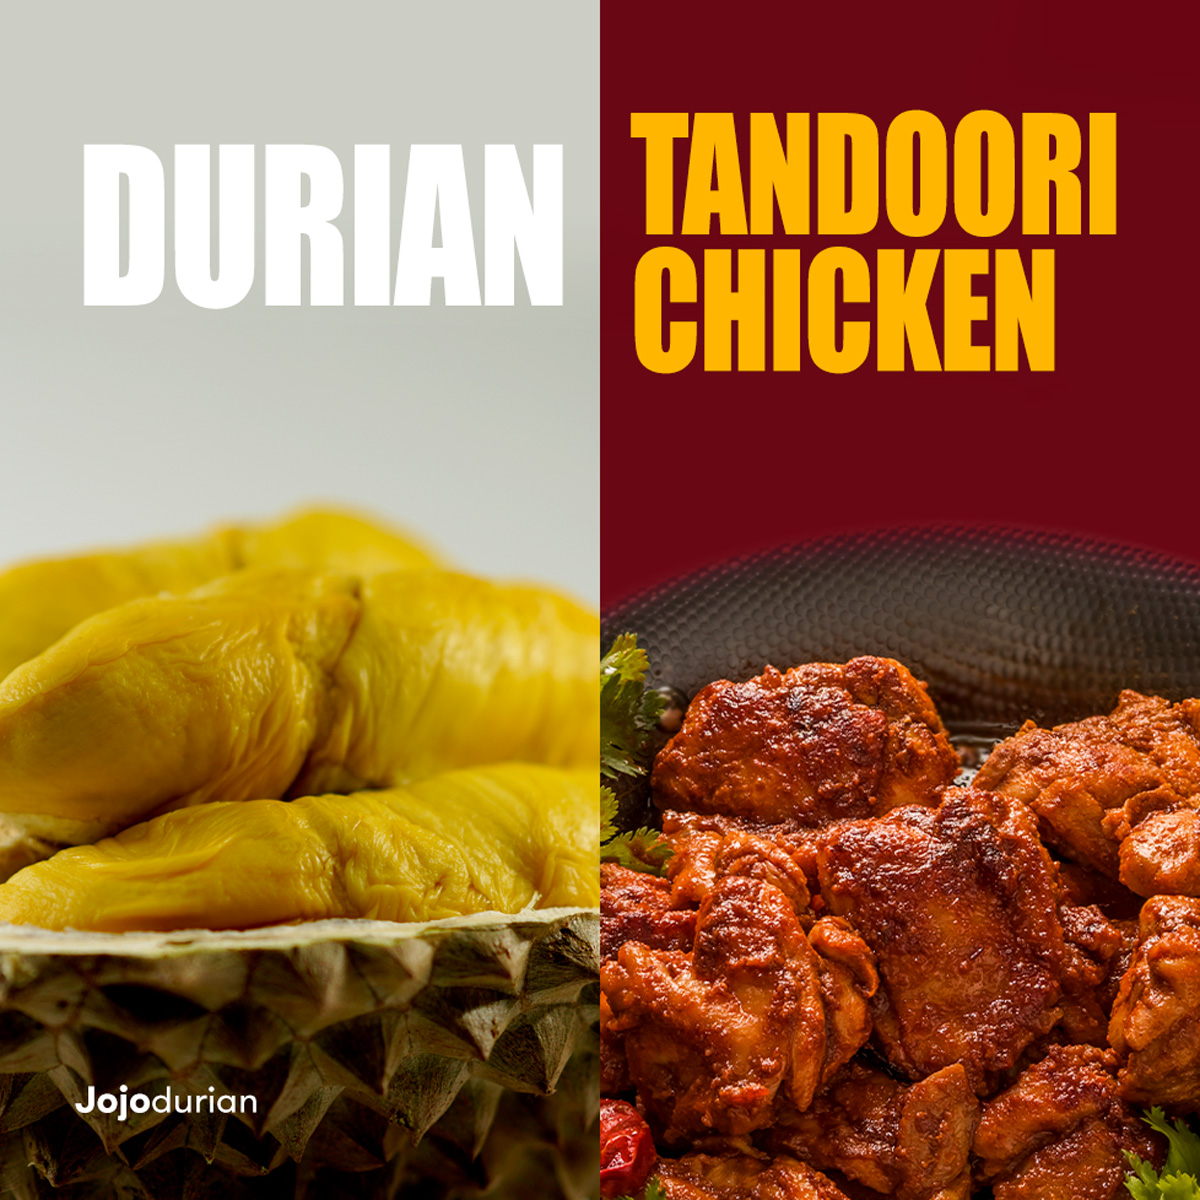 Meal Replacement: Durian vs Tandoori Chicken